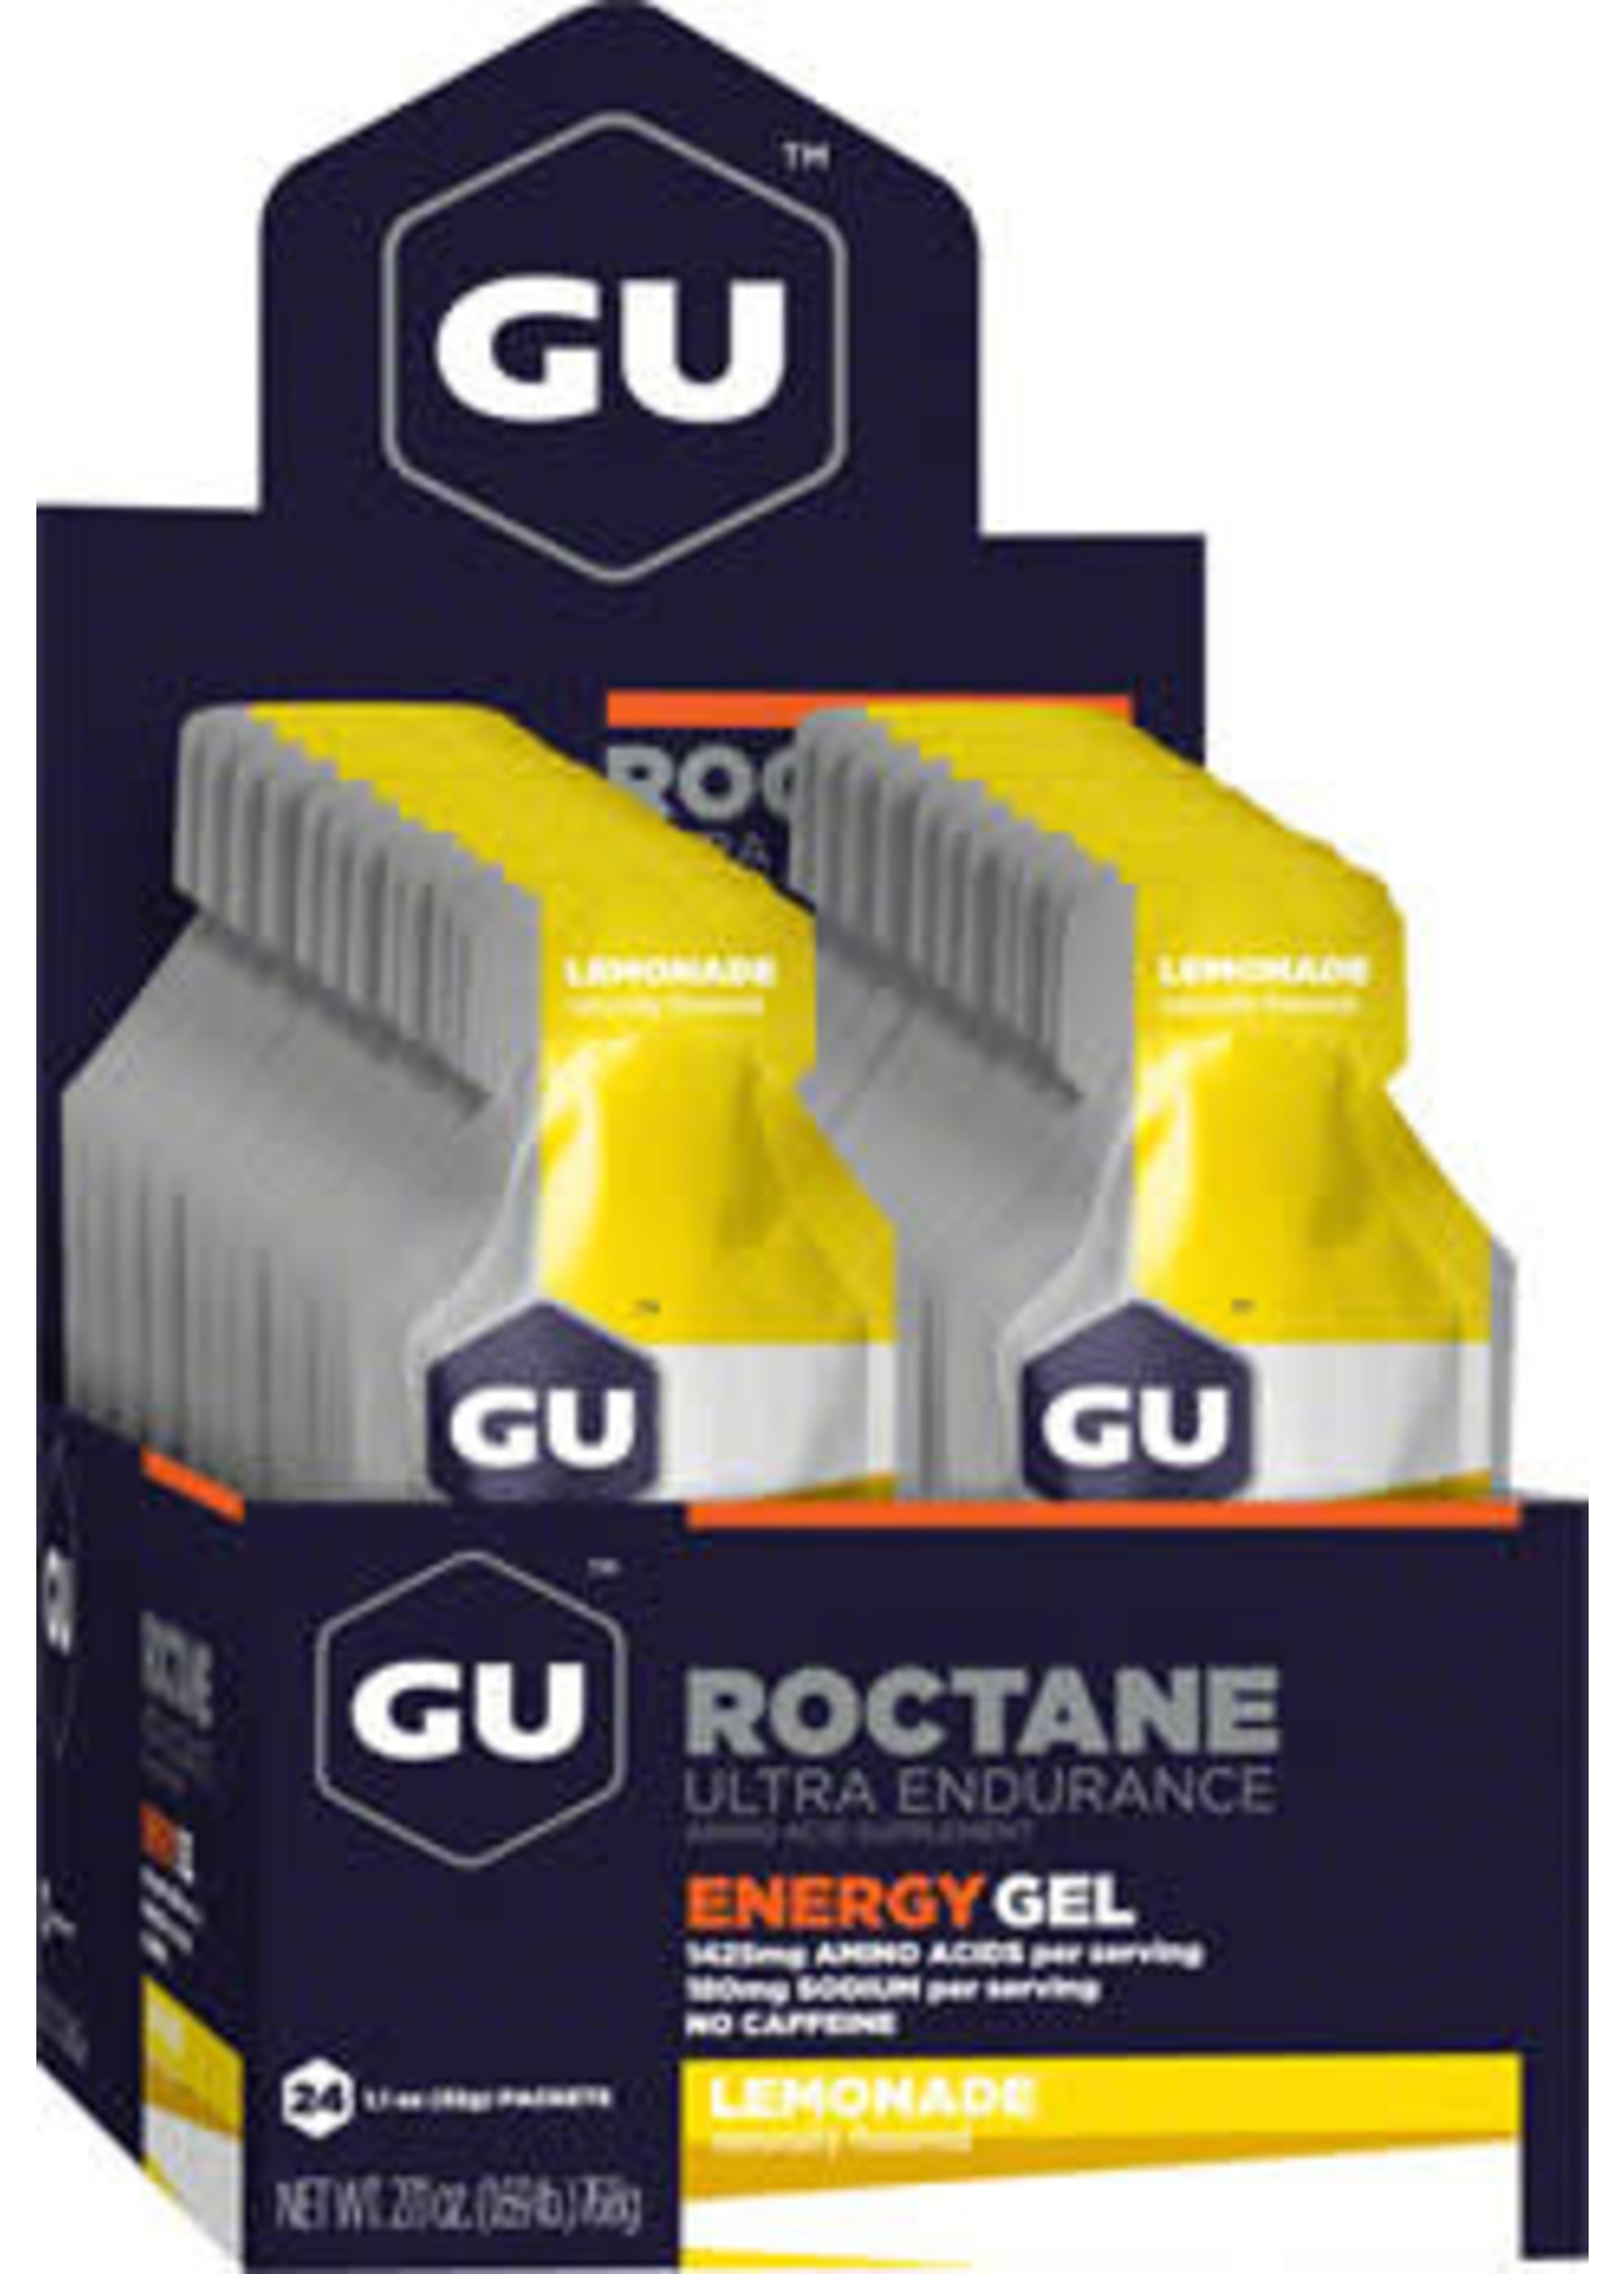 GU GU Roctane Energy Gel